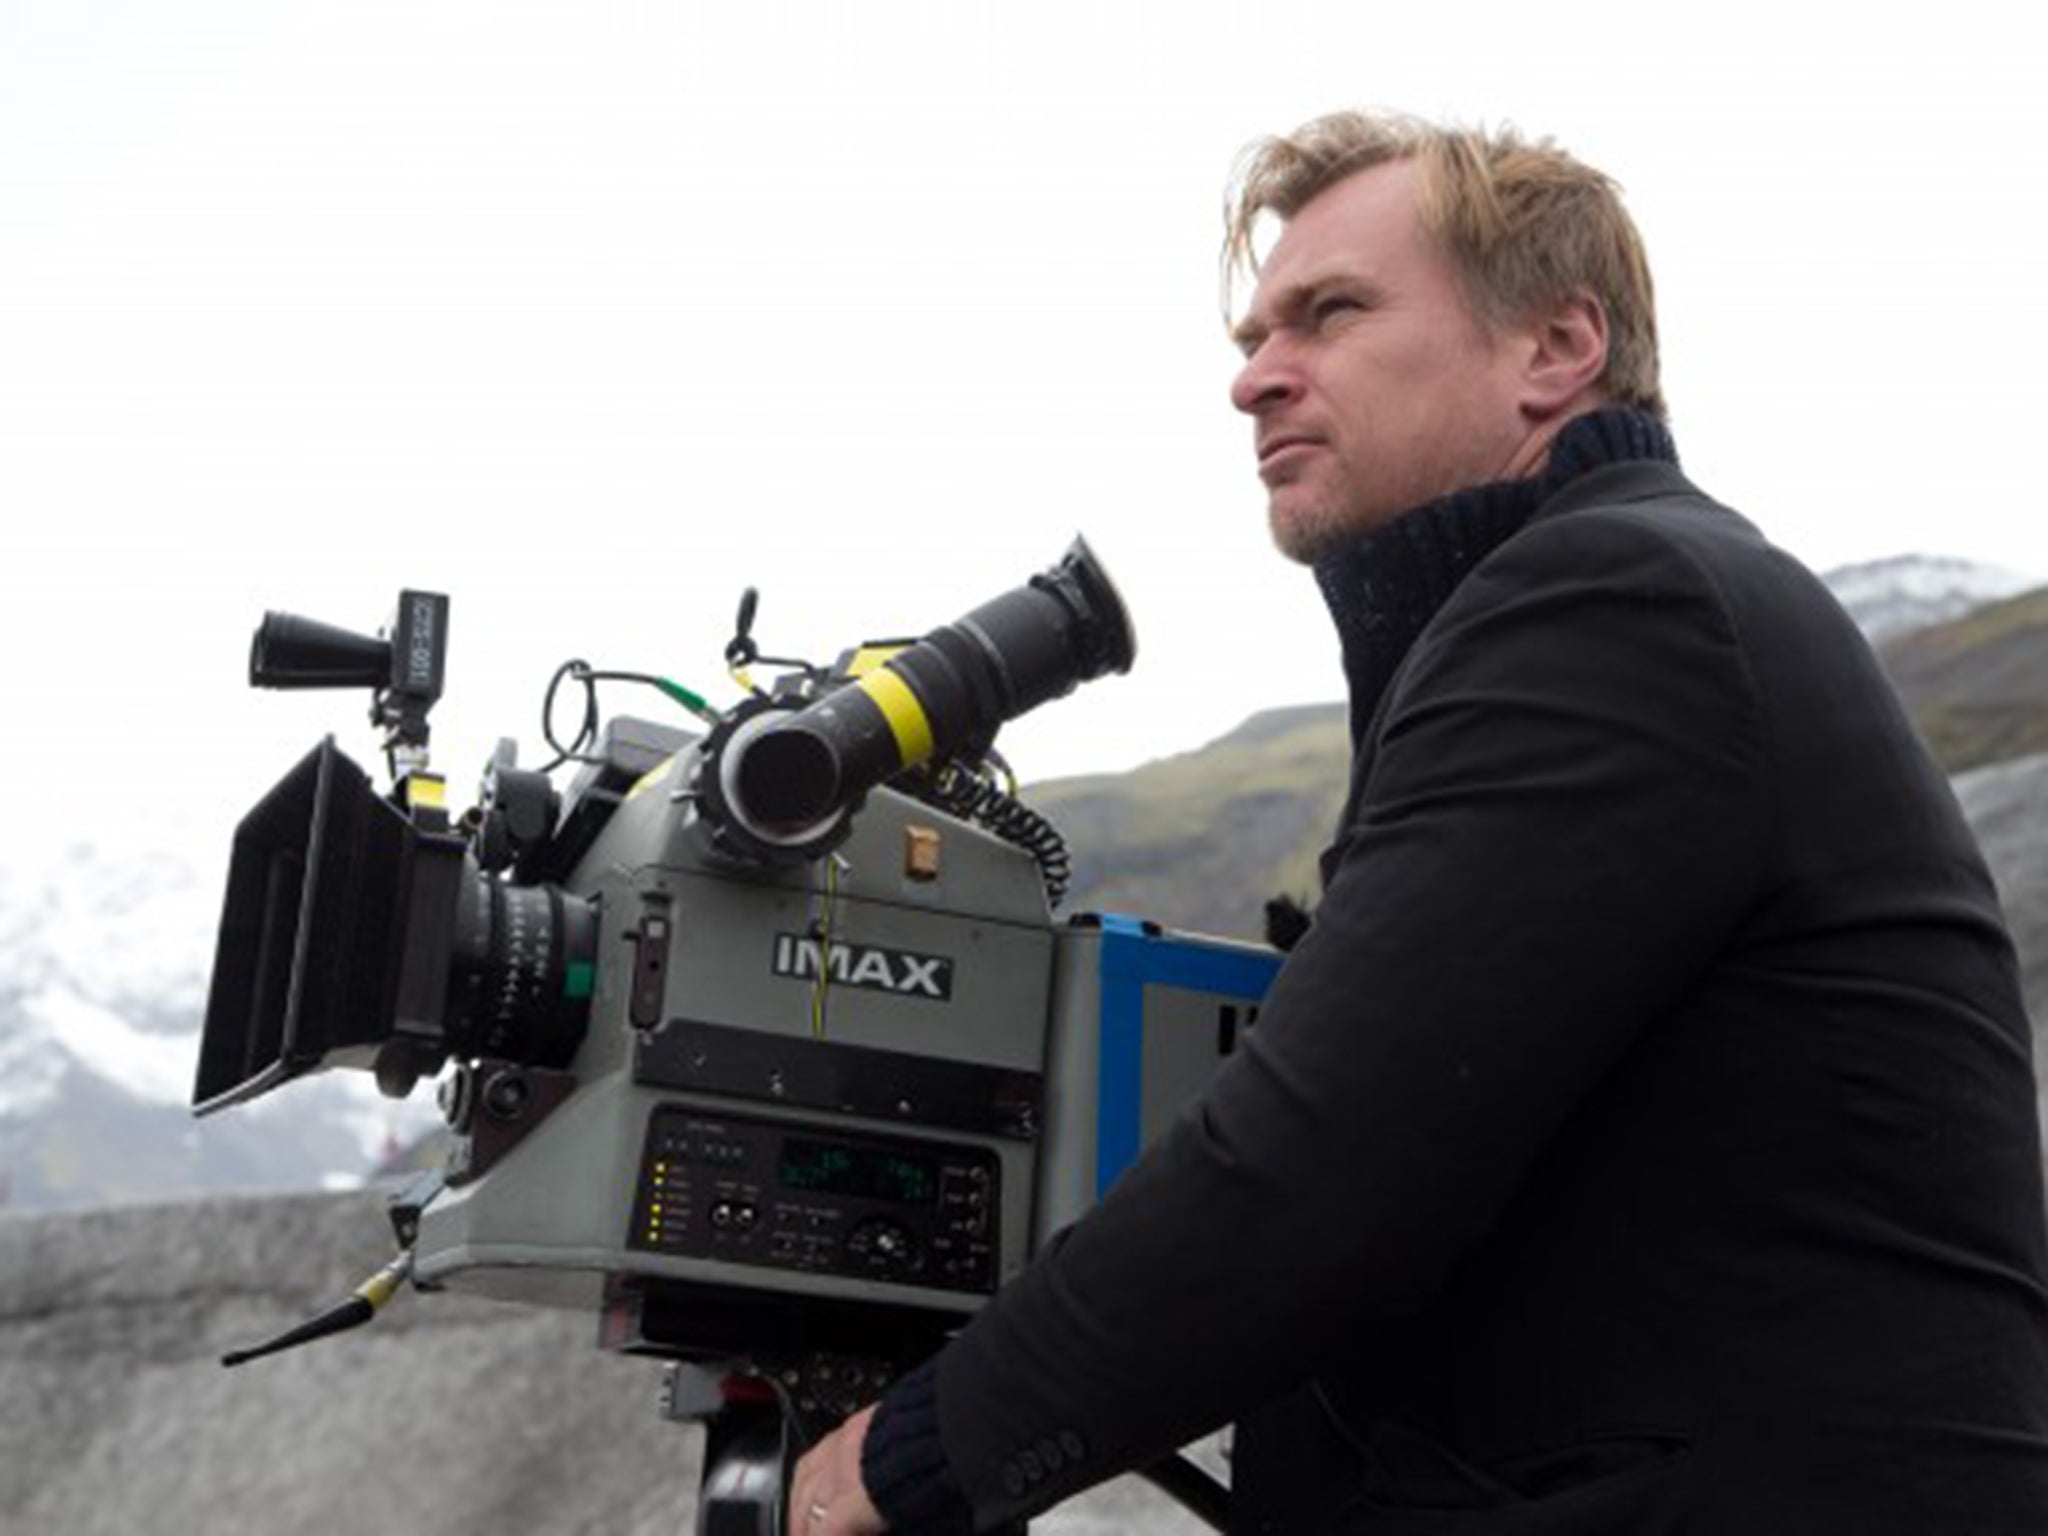 The director Christopher Nolan shot his recent wartime epic ‘Dunkirk’ on film, not digital